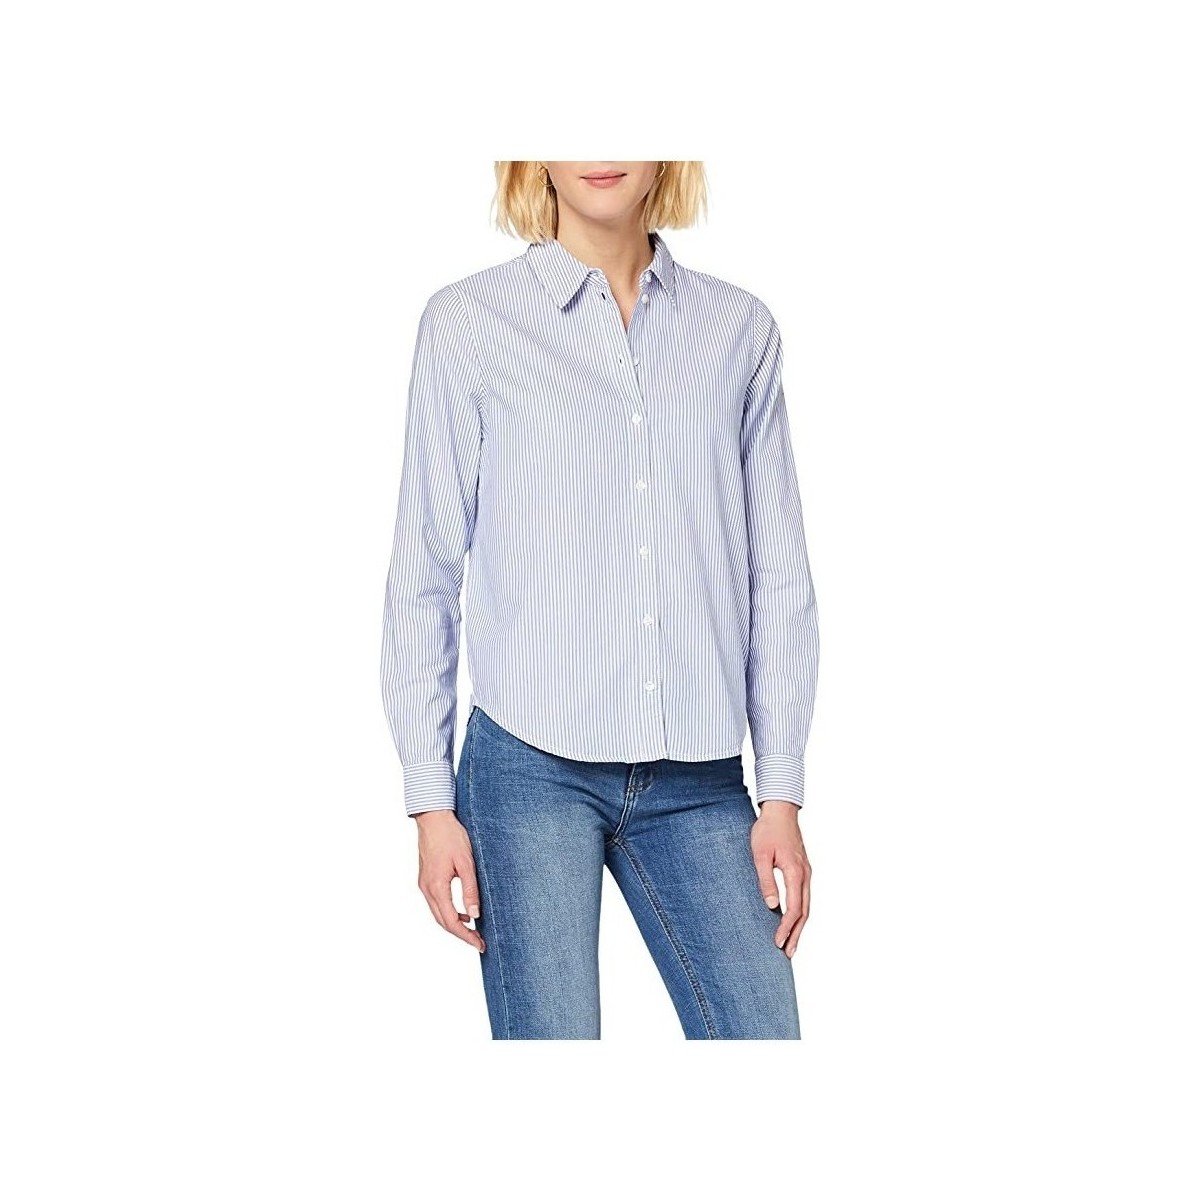 Textiel Dames Tops / Blousjes Only Marcia Shirt - Blue Blauw